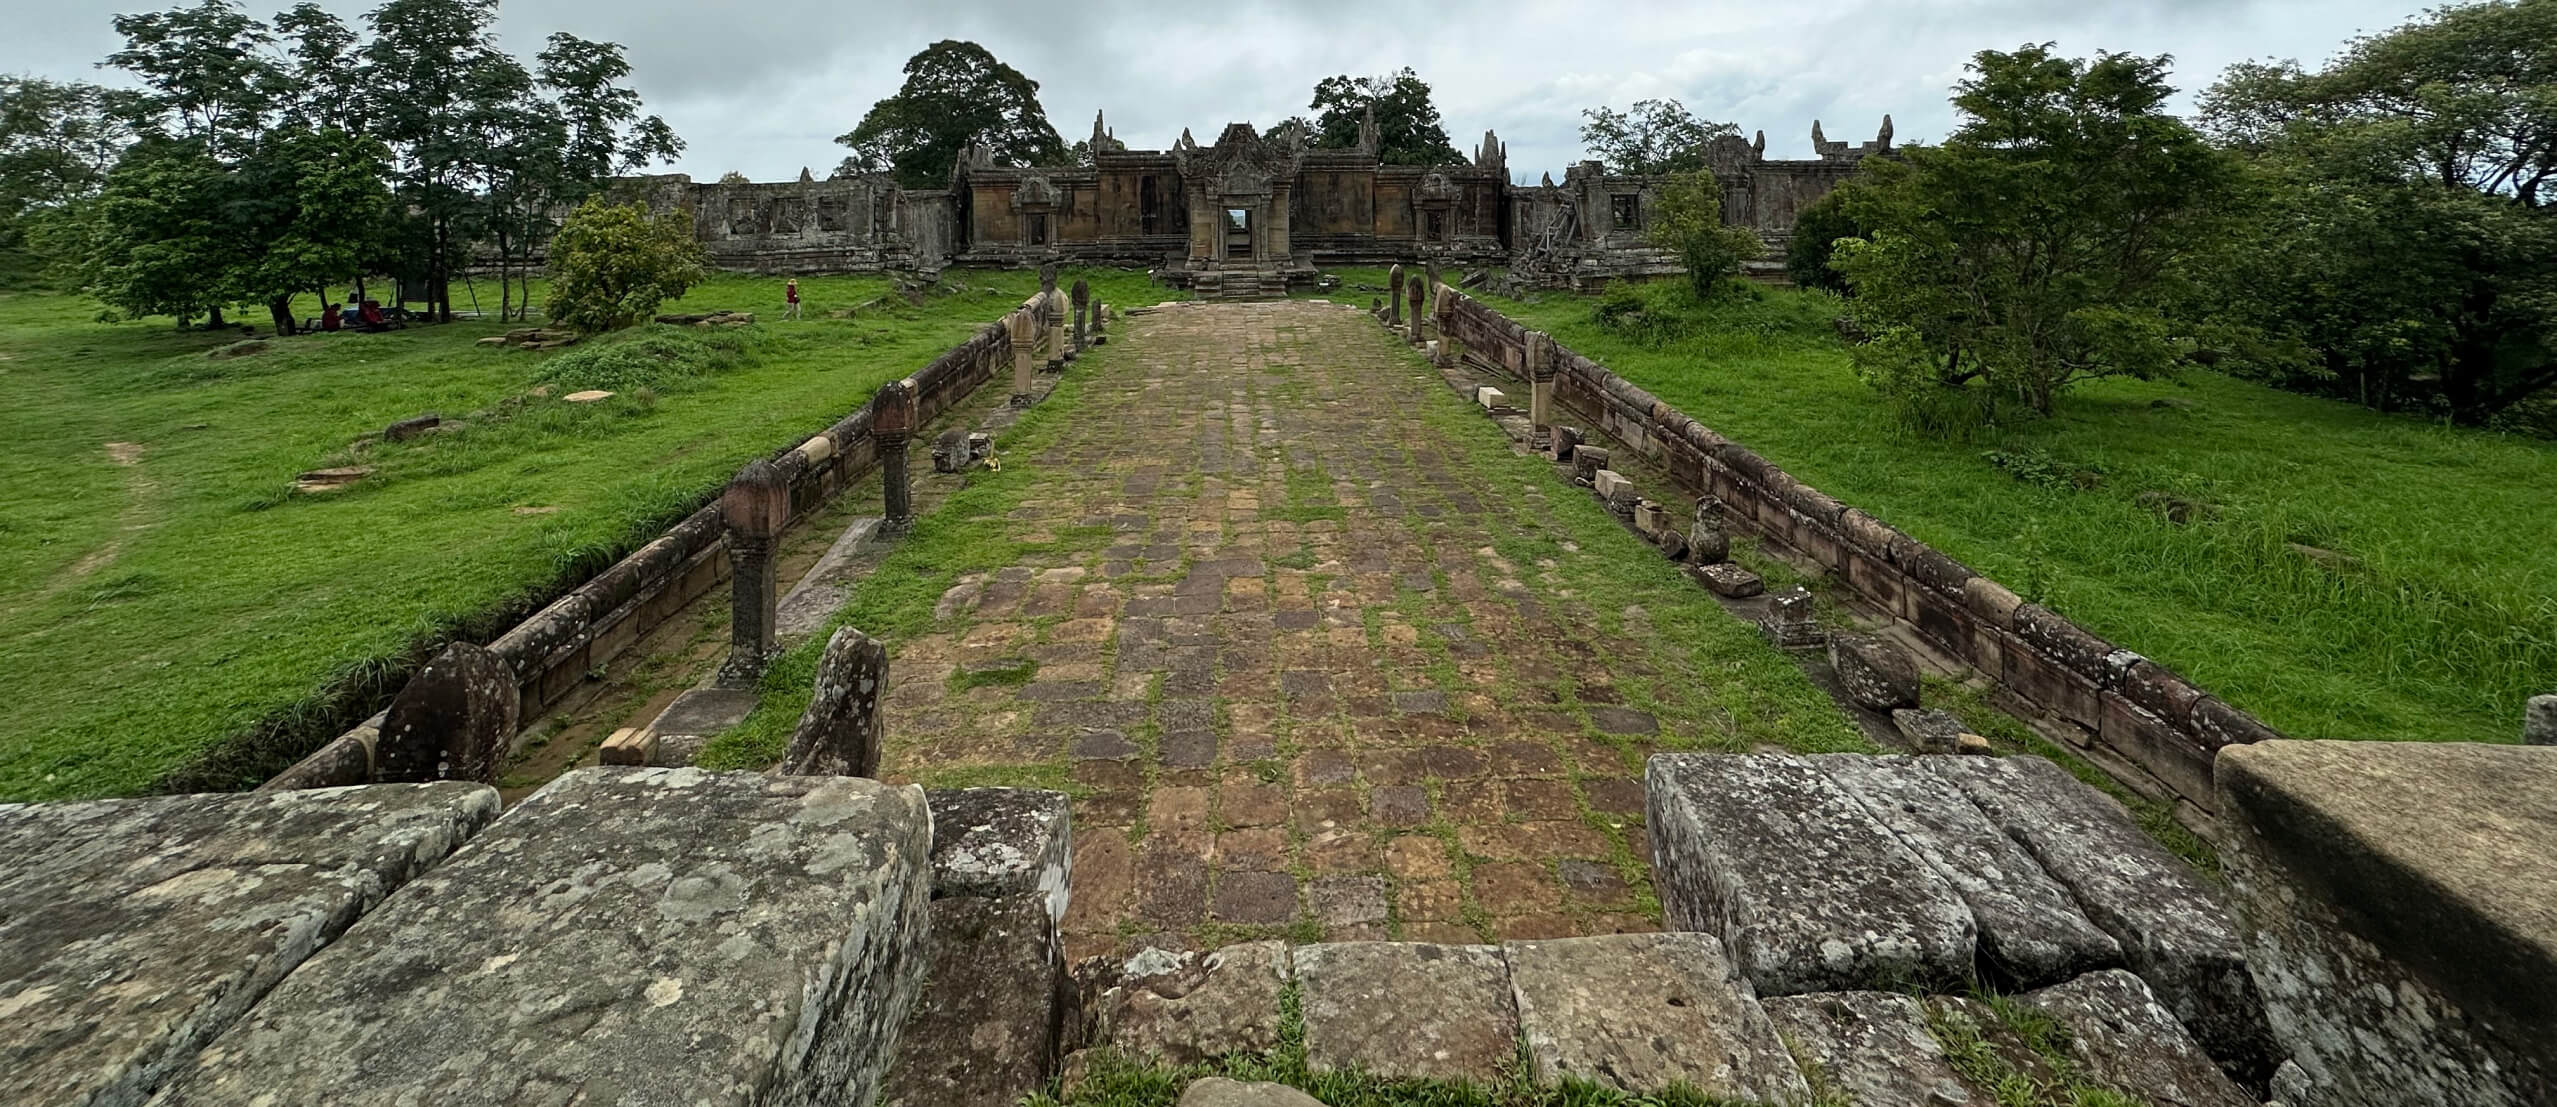 Preah Vihear Temple, Preah Vihear Province